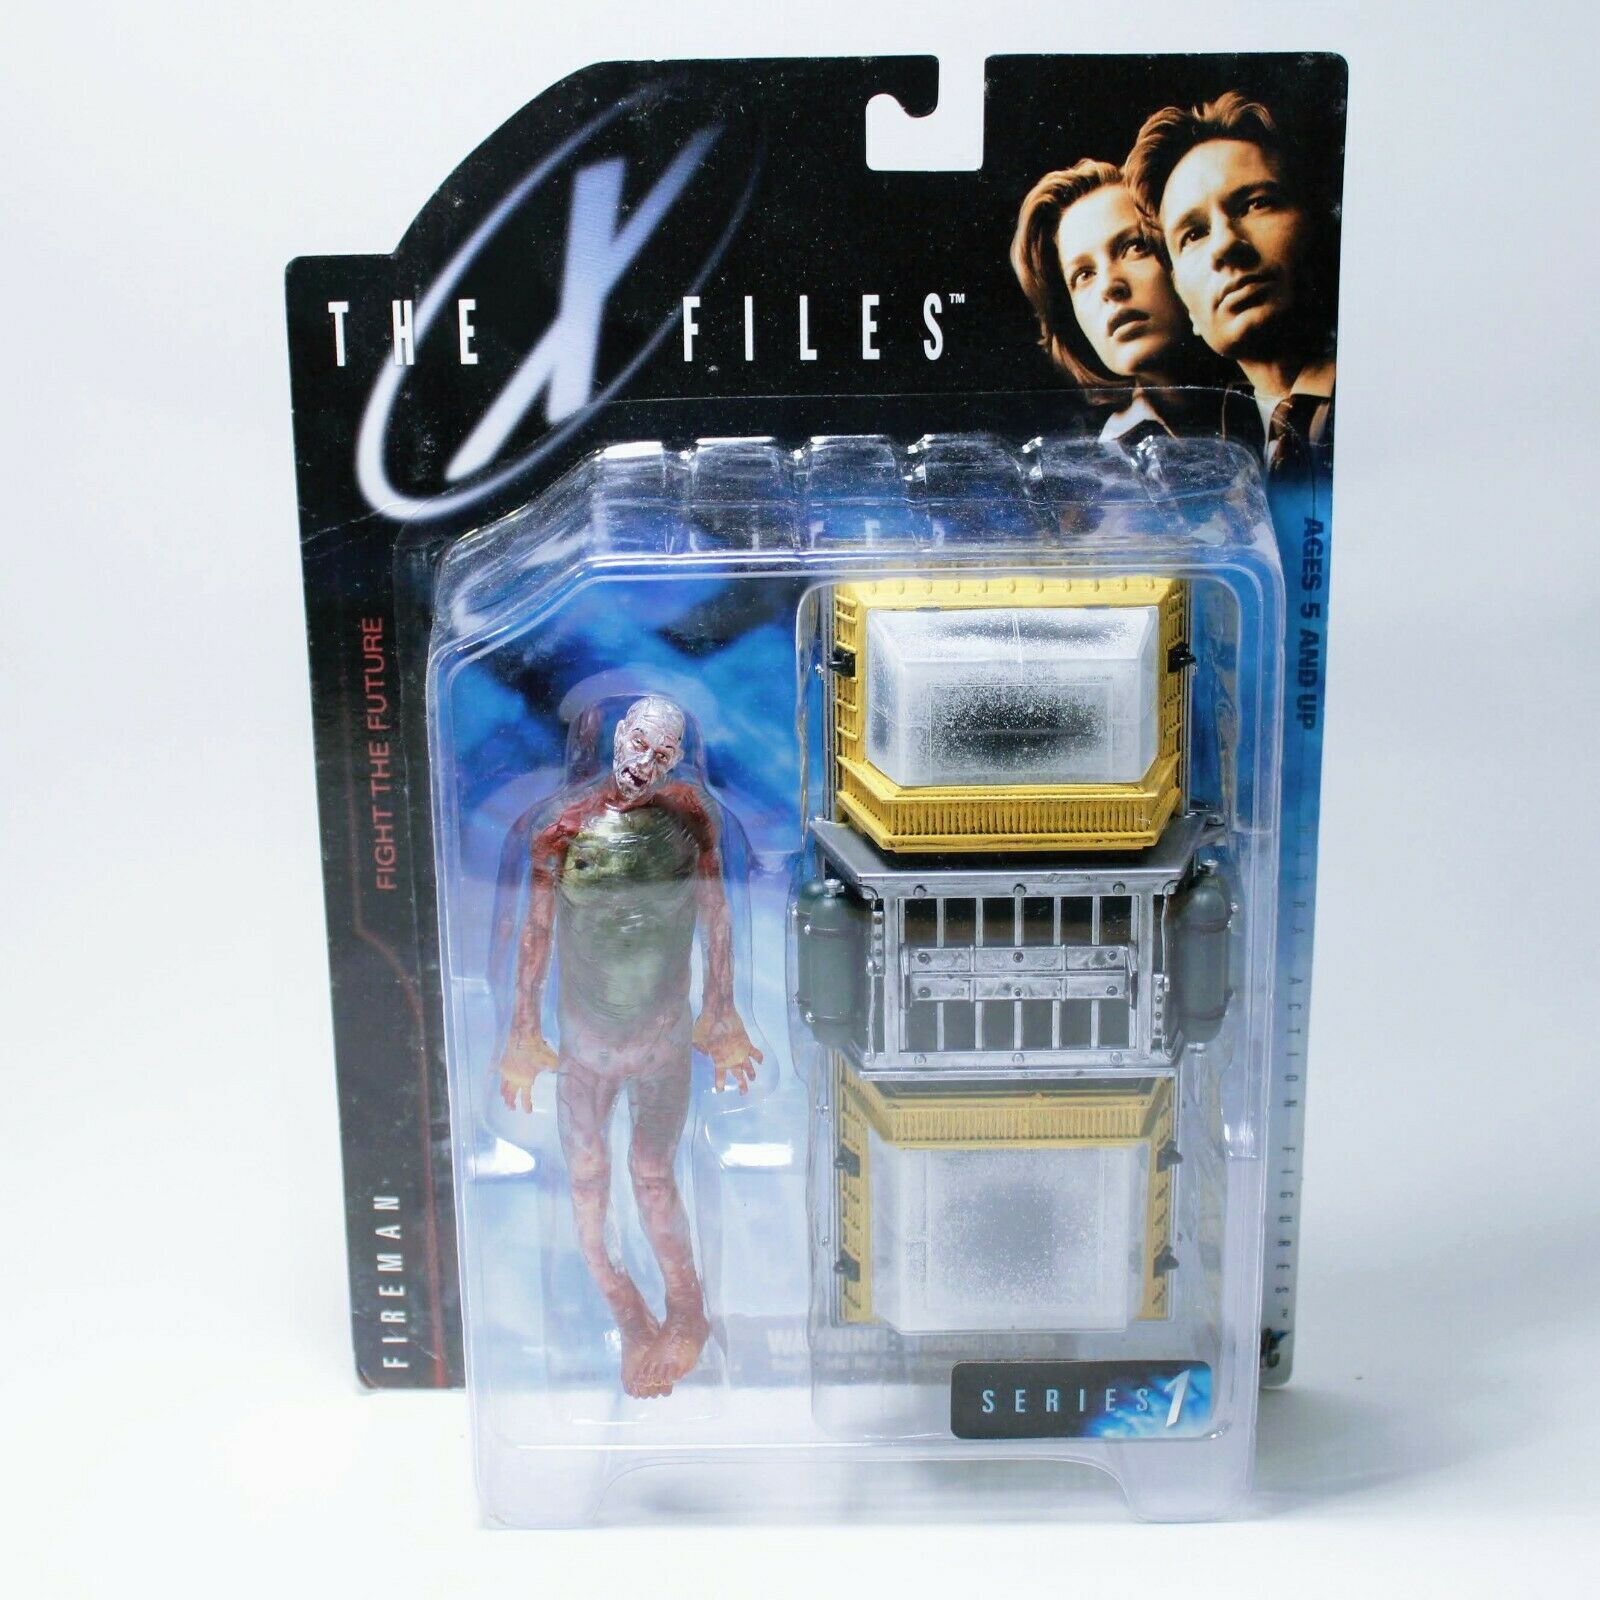 McFarlane Toys The X Files Fireman Series 1 Action Figure